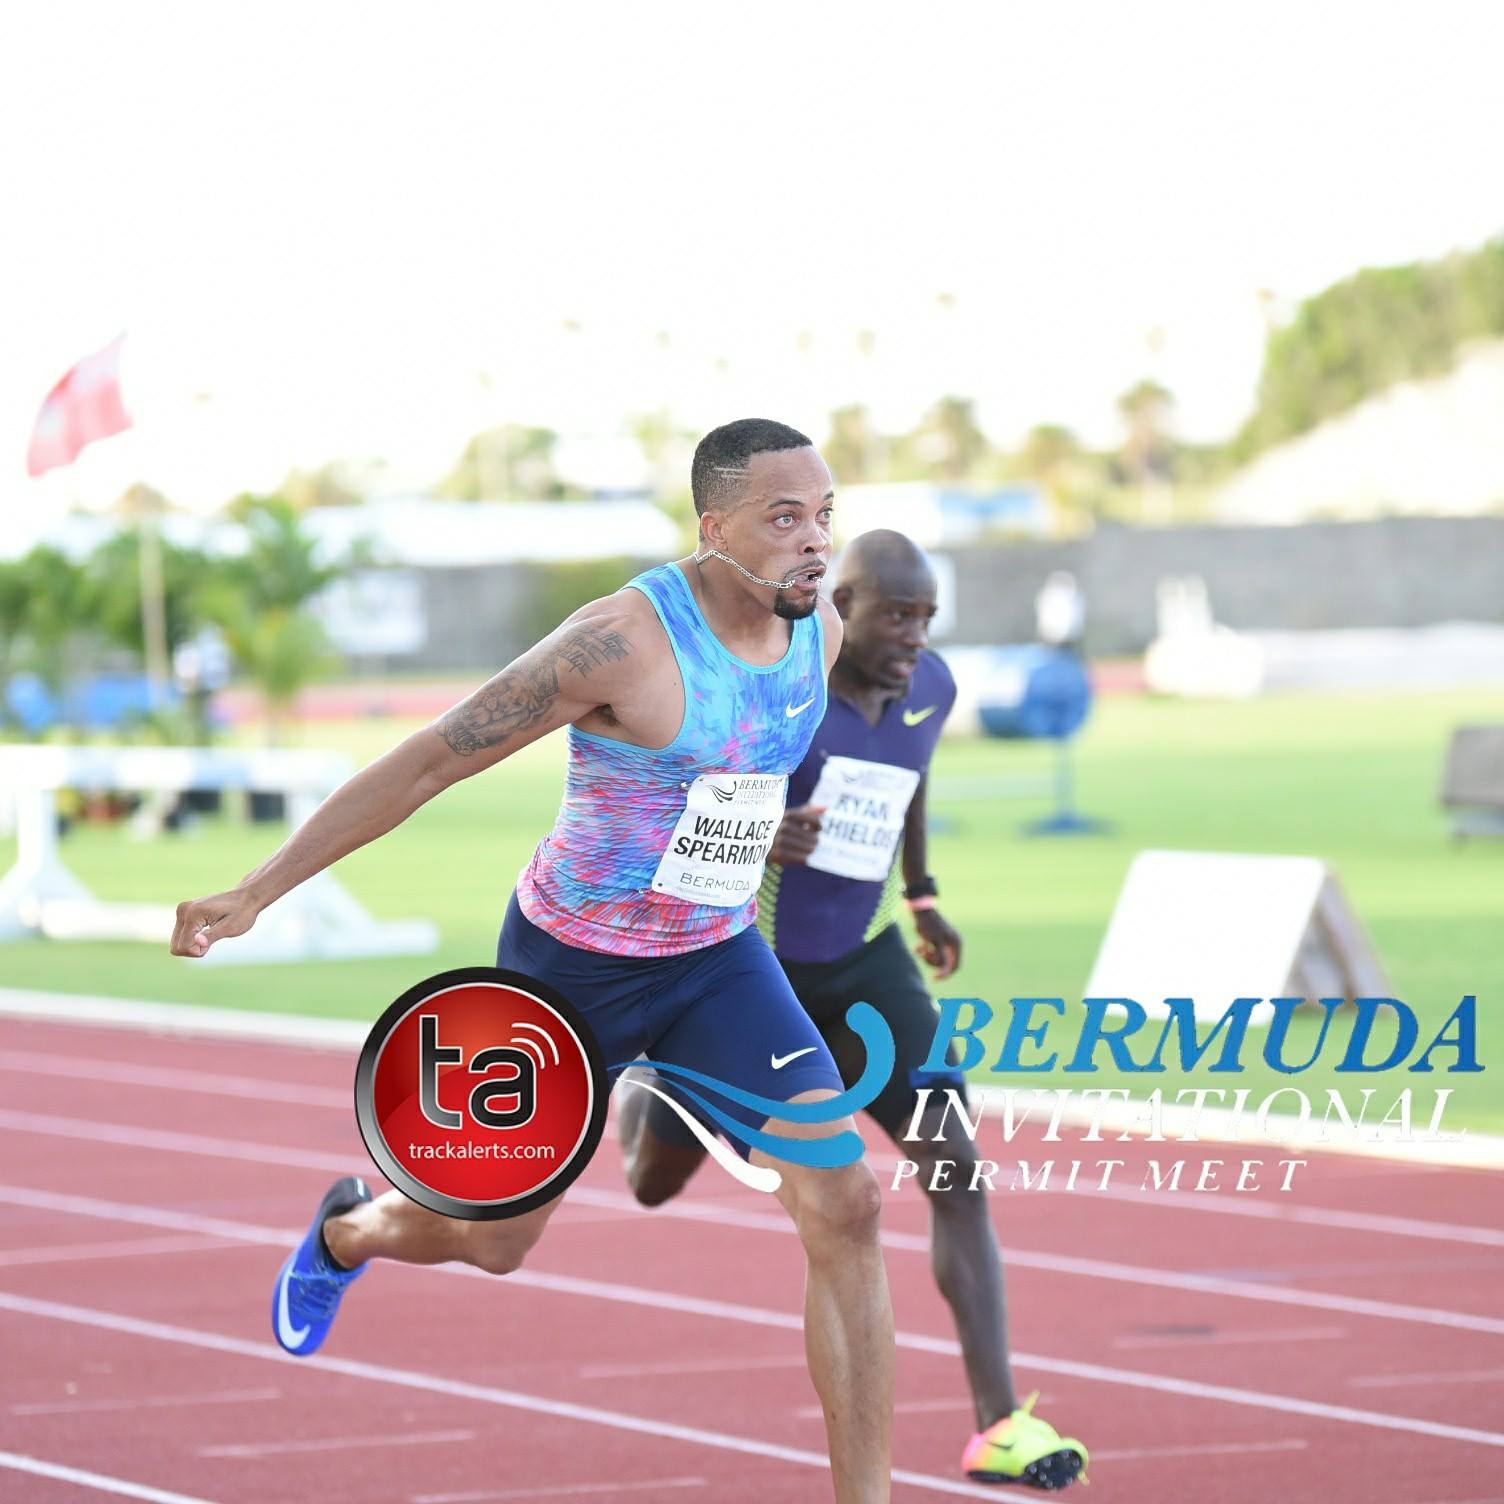 Bermuda Invitational Results – 1 July 2017